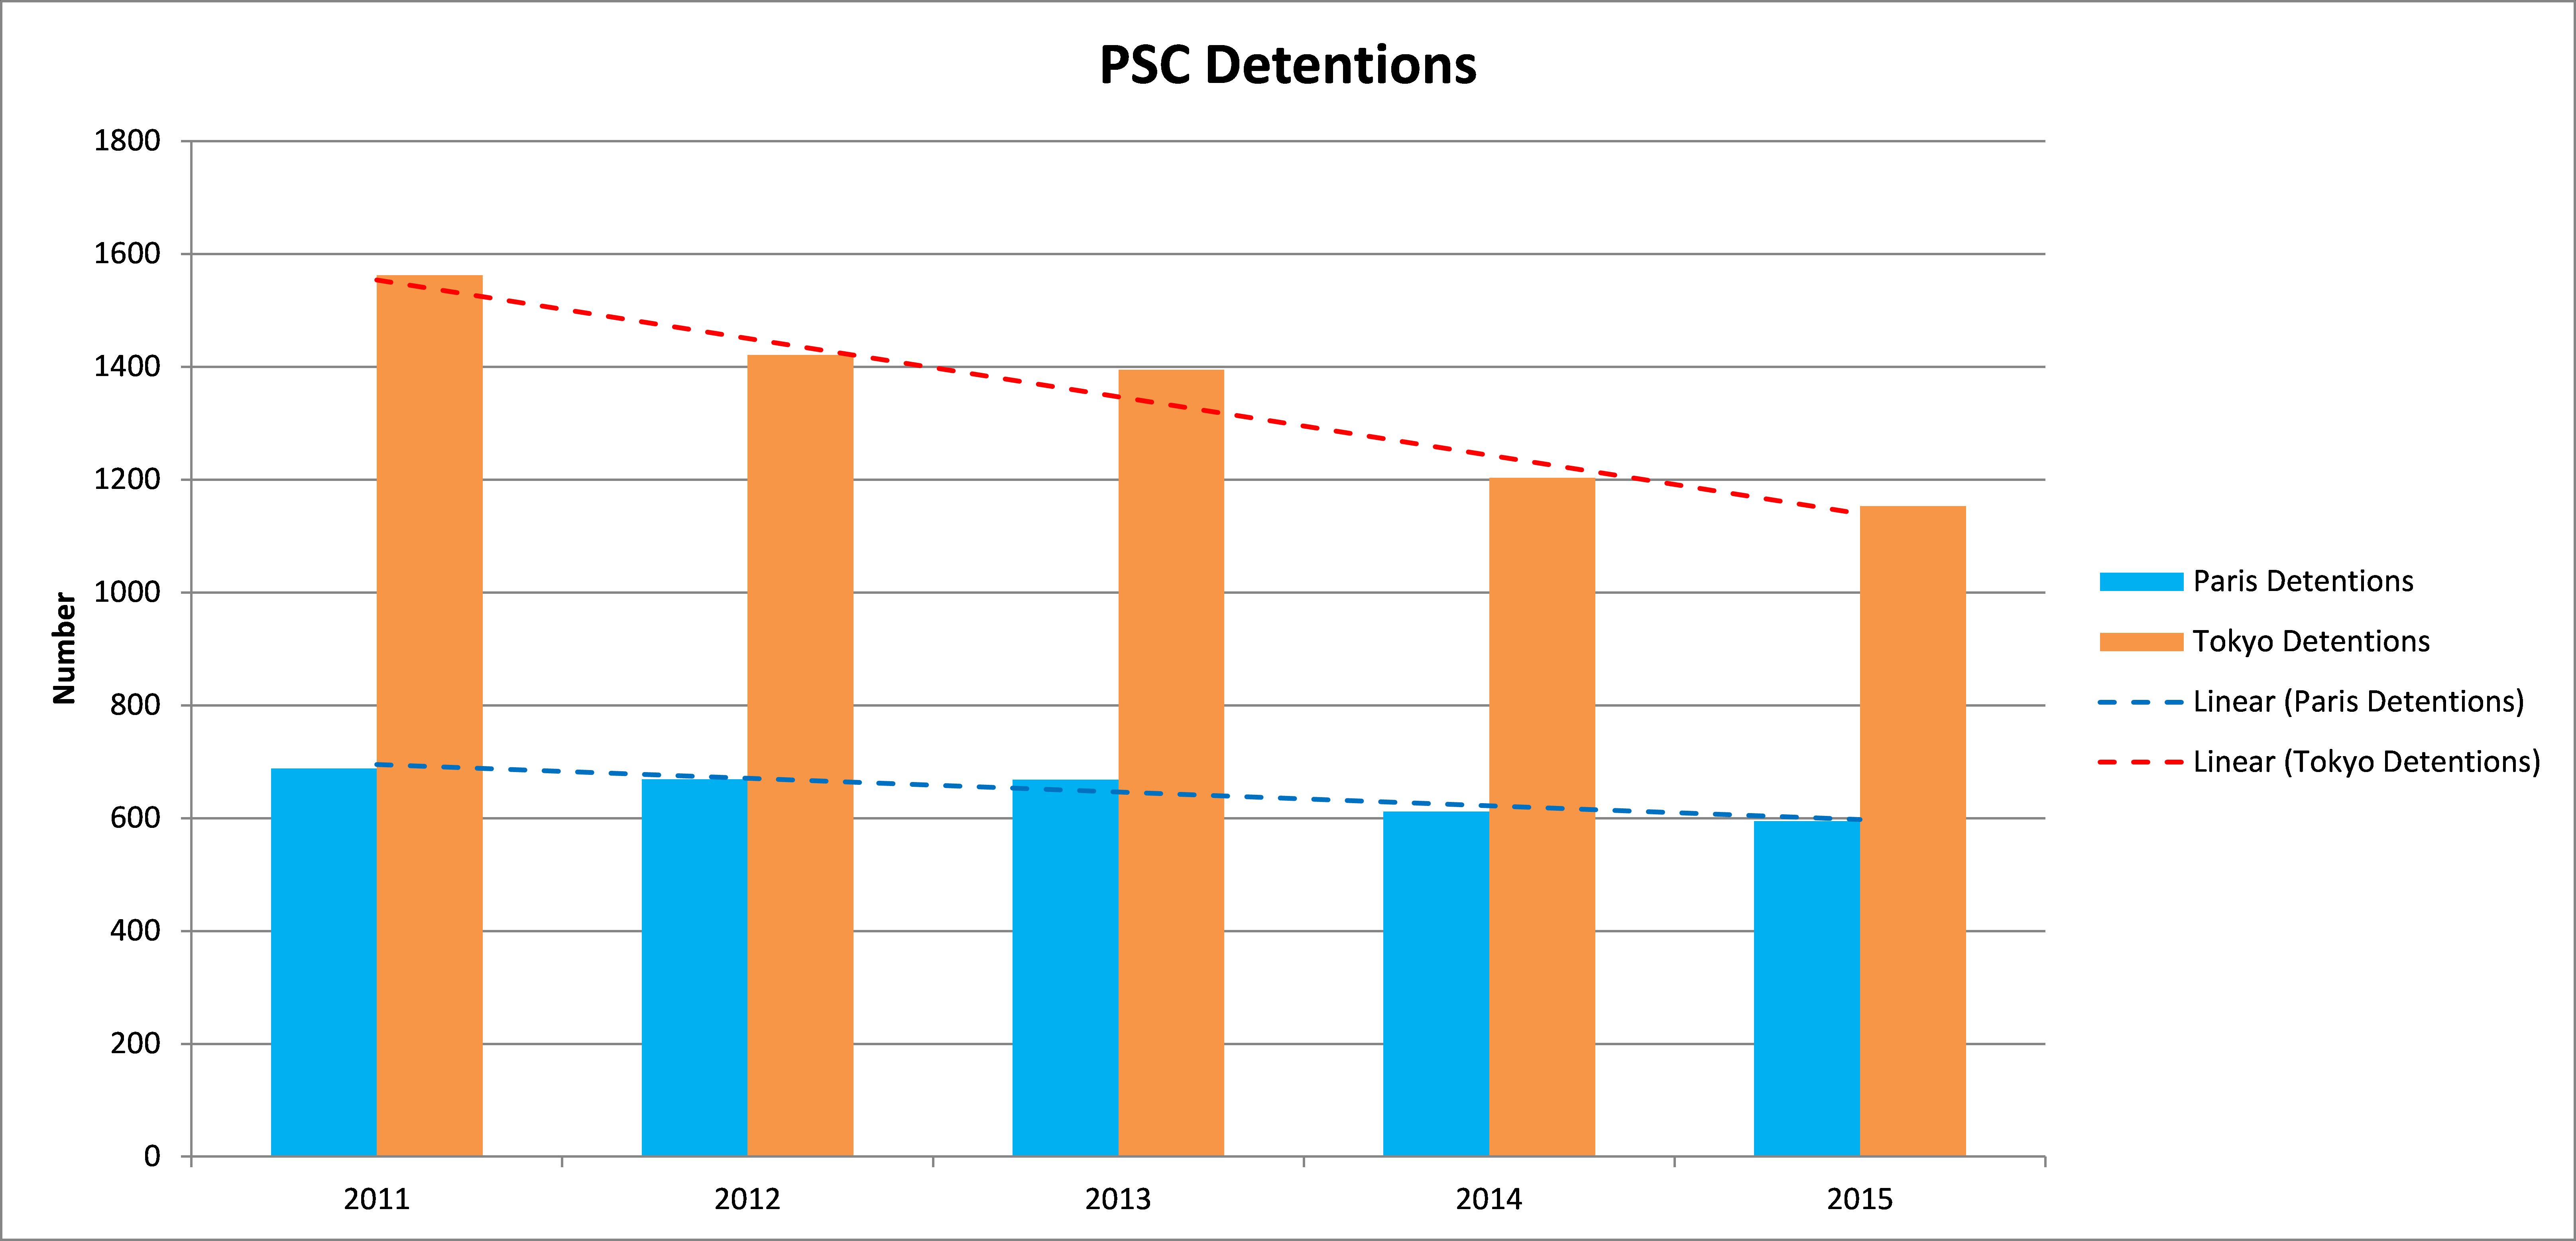 PSC Detentions